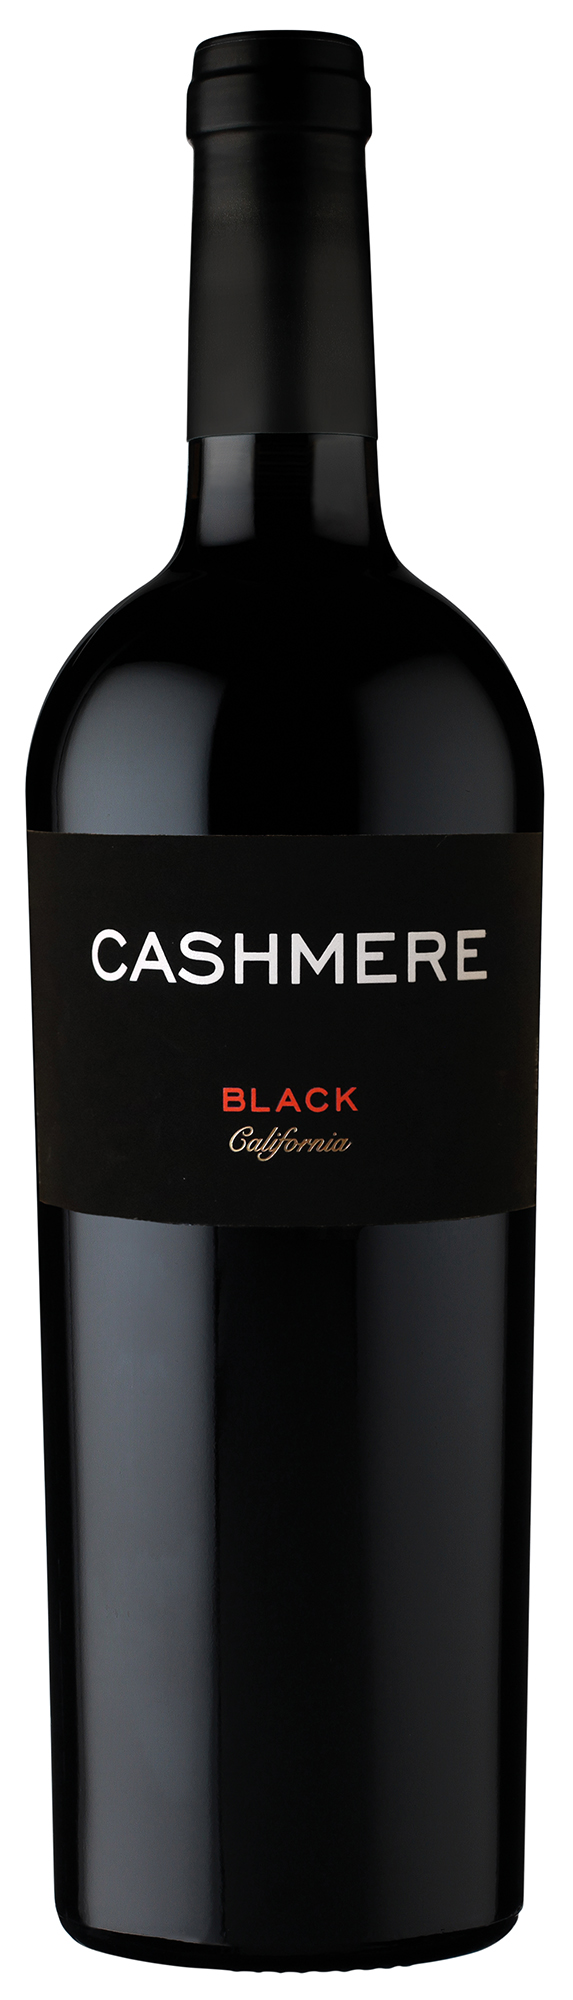  Cashmere Black California Red, Cline Cellars 2019